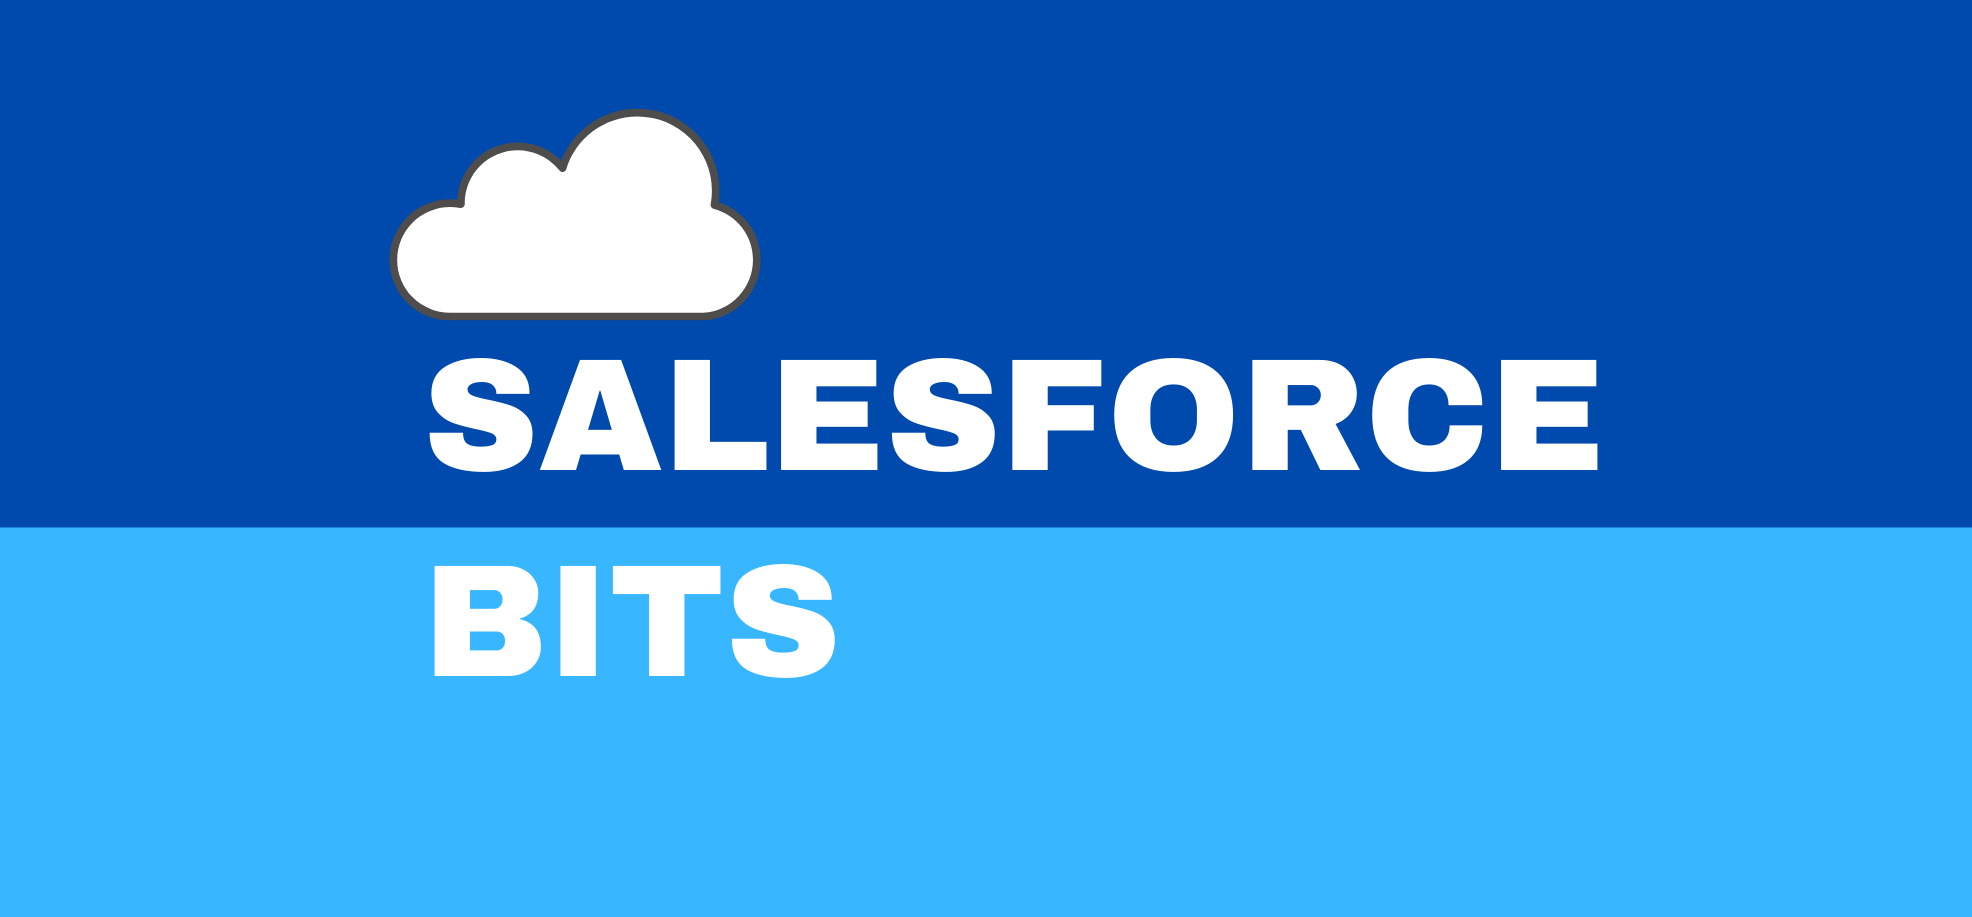 Salesforce Bits